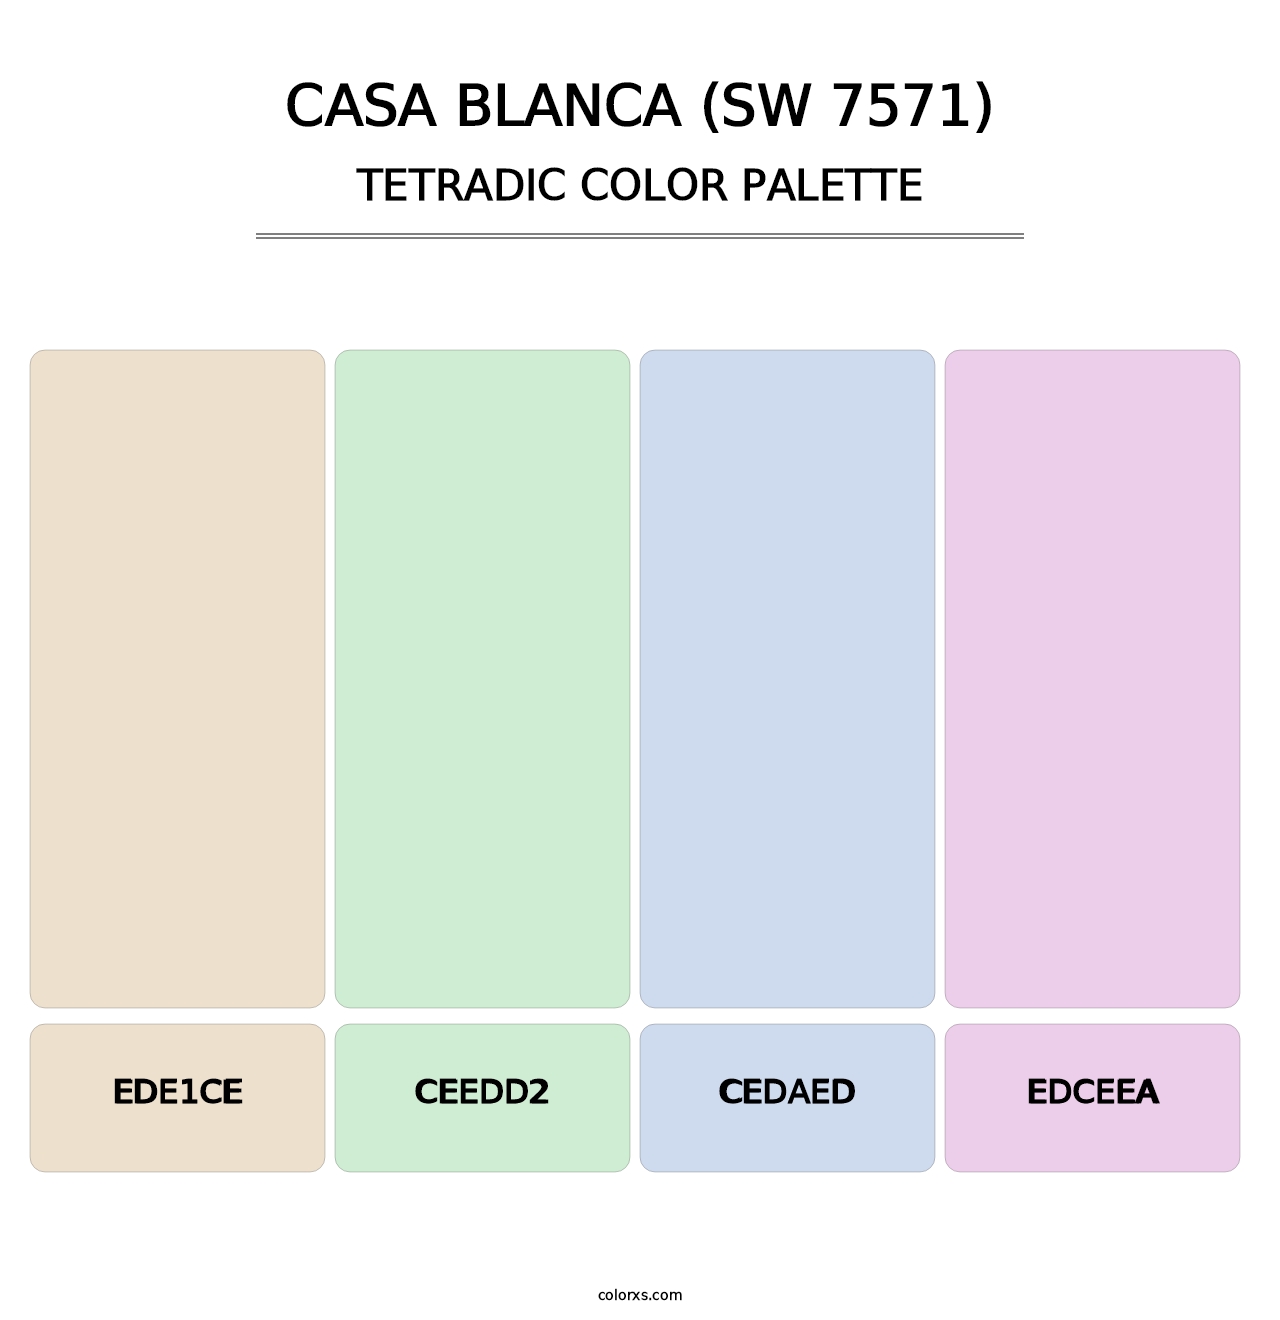 Casa Blanca (SW 7571) - Tetradic Color Palette